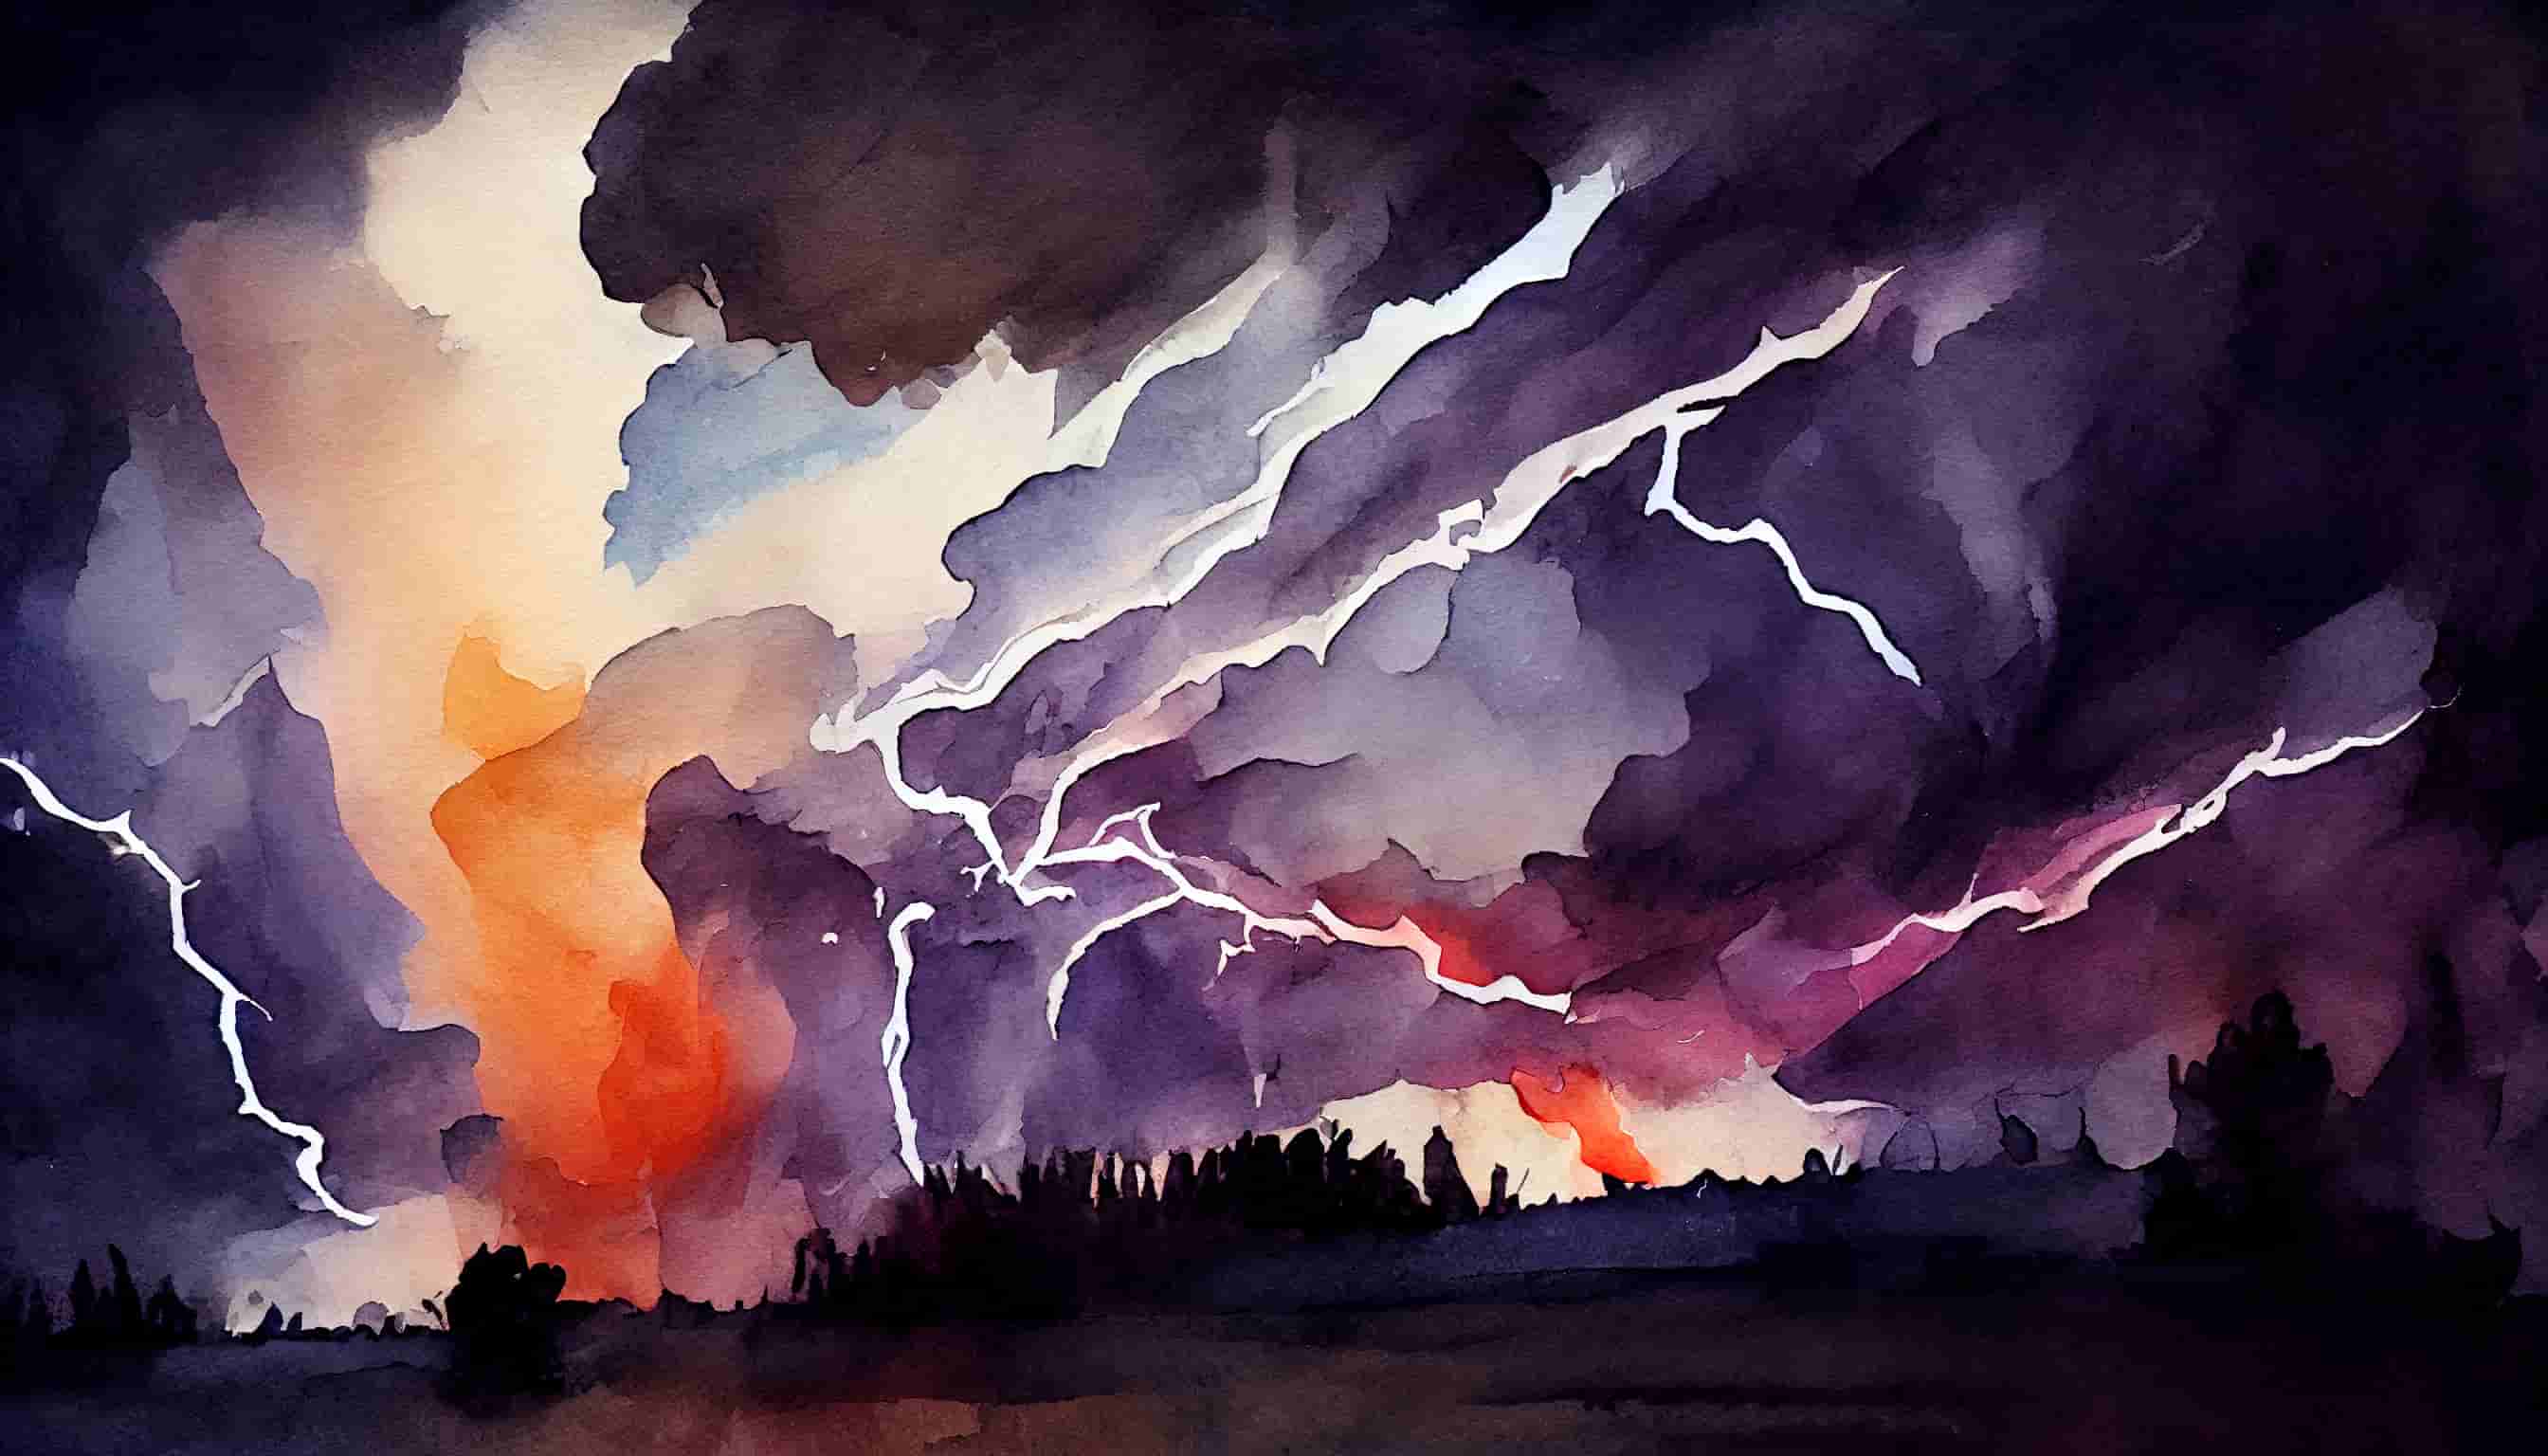 watercolor of a fierce lightning storm